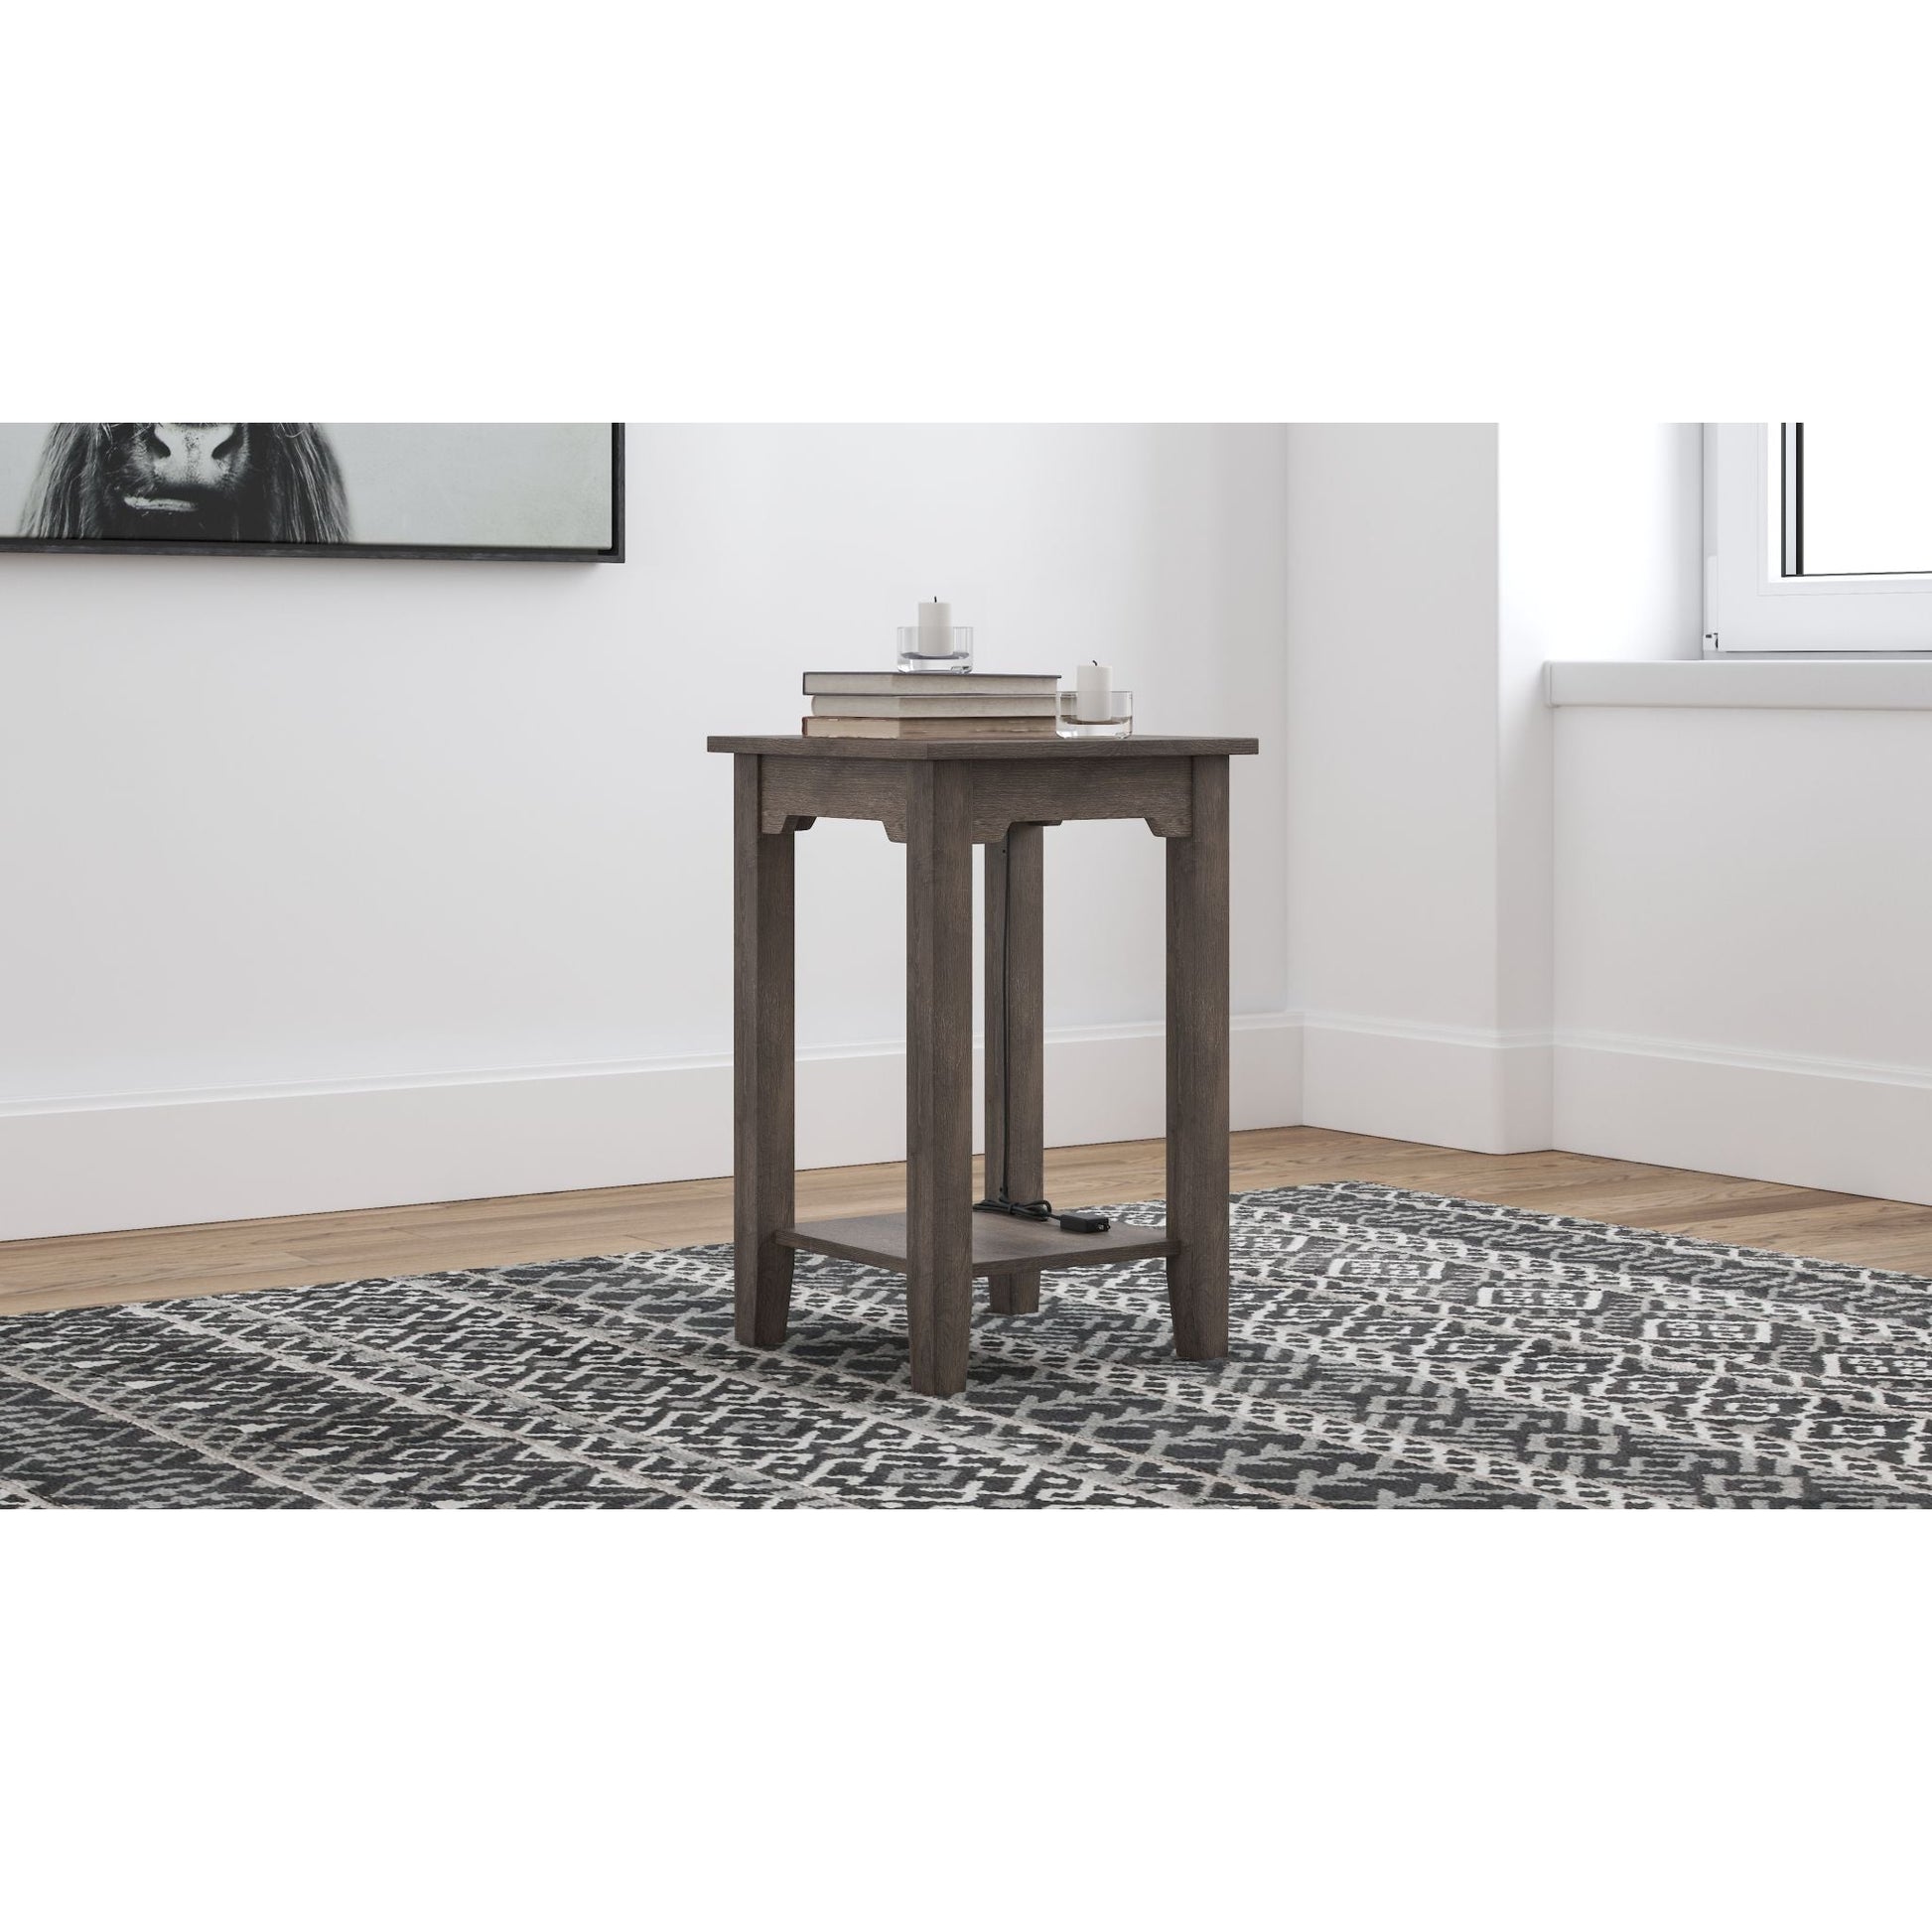 Arlenbry Chairside Table - Gray